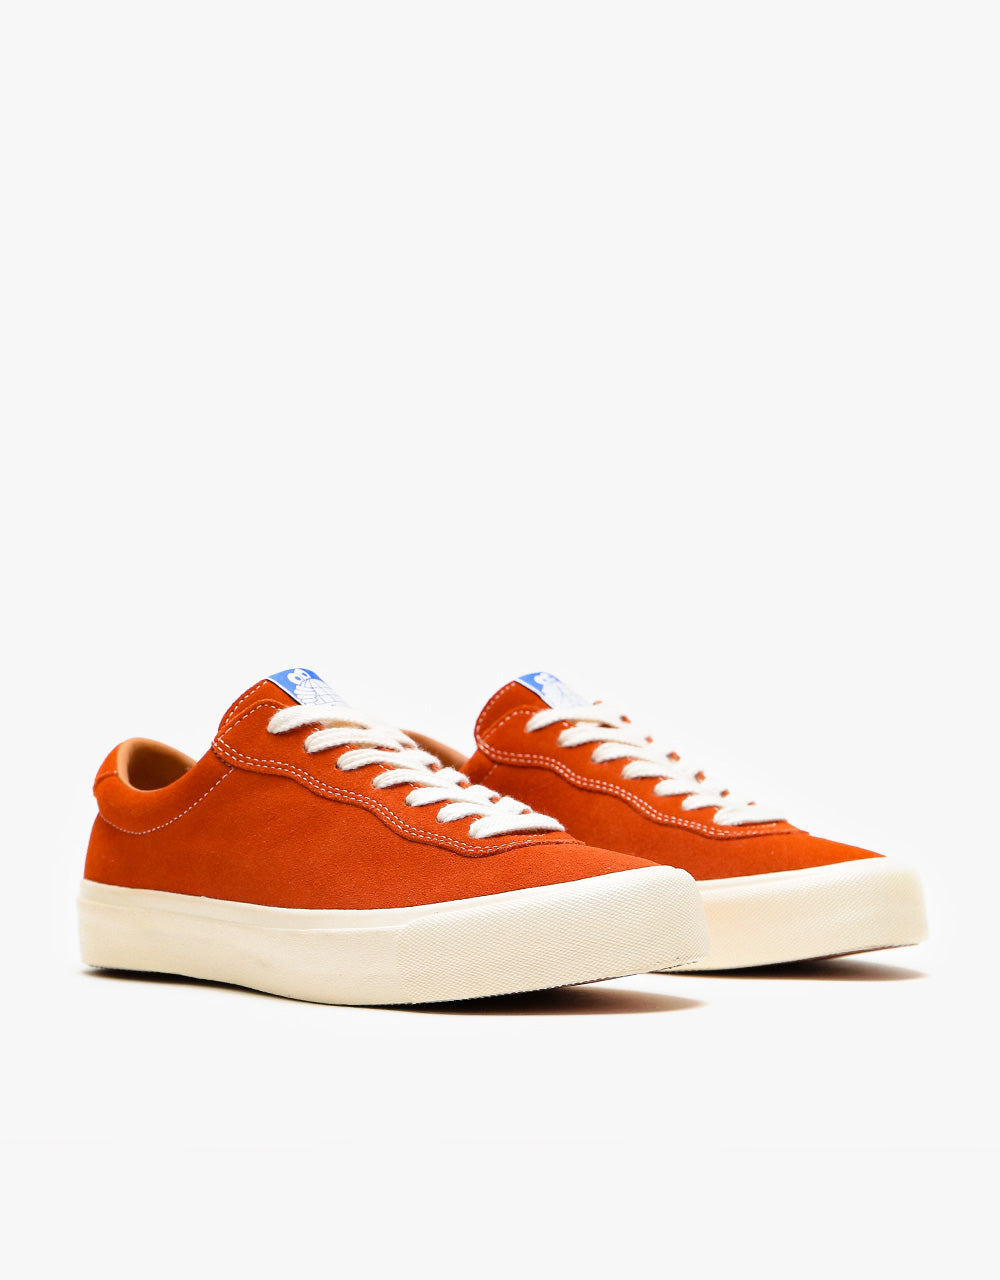 Last Resort AB VM001 Suede Lo Skate Shoes - Orange/White